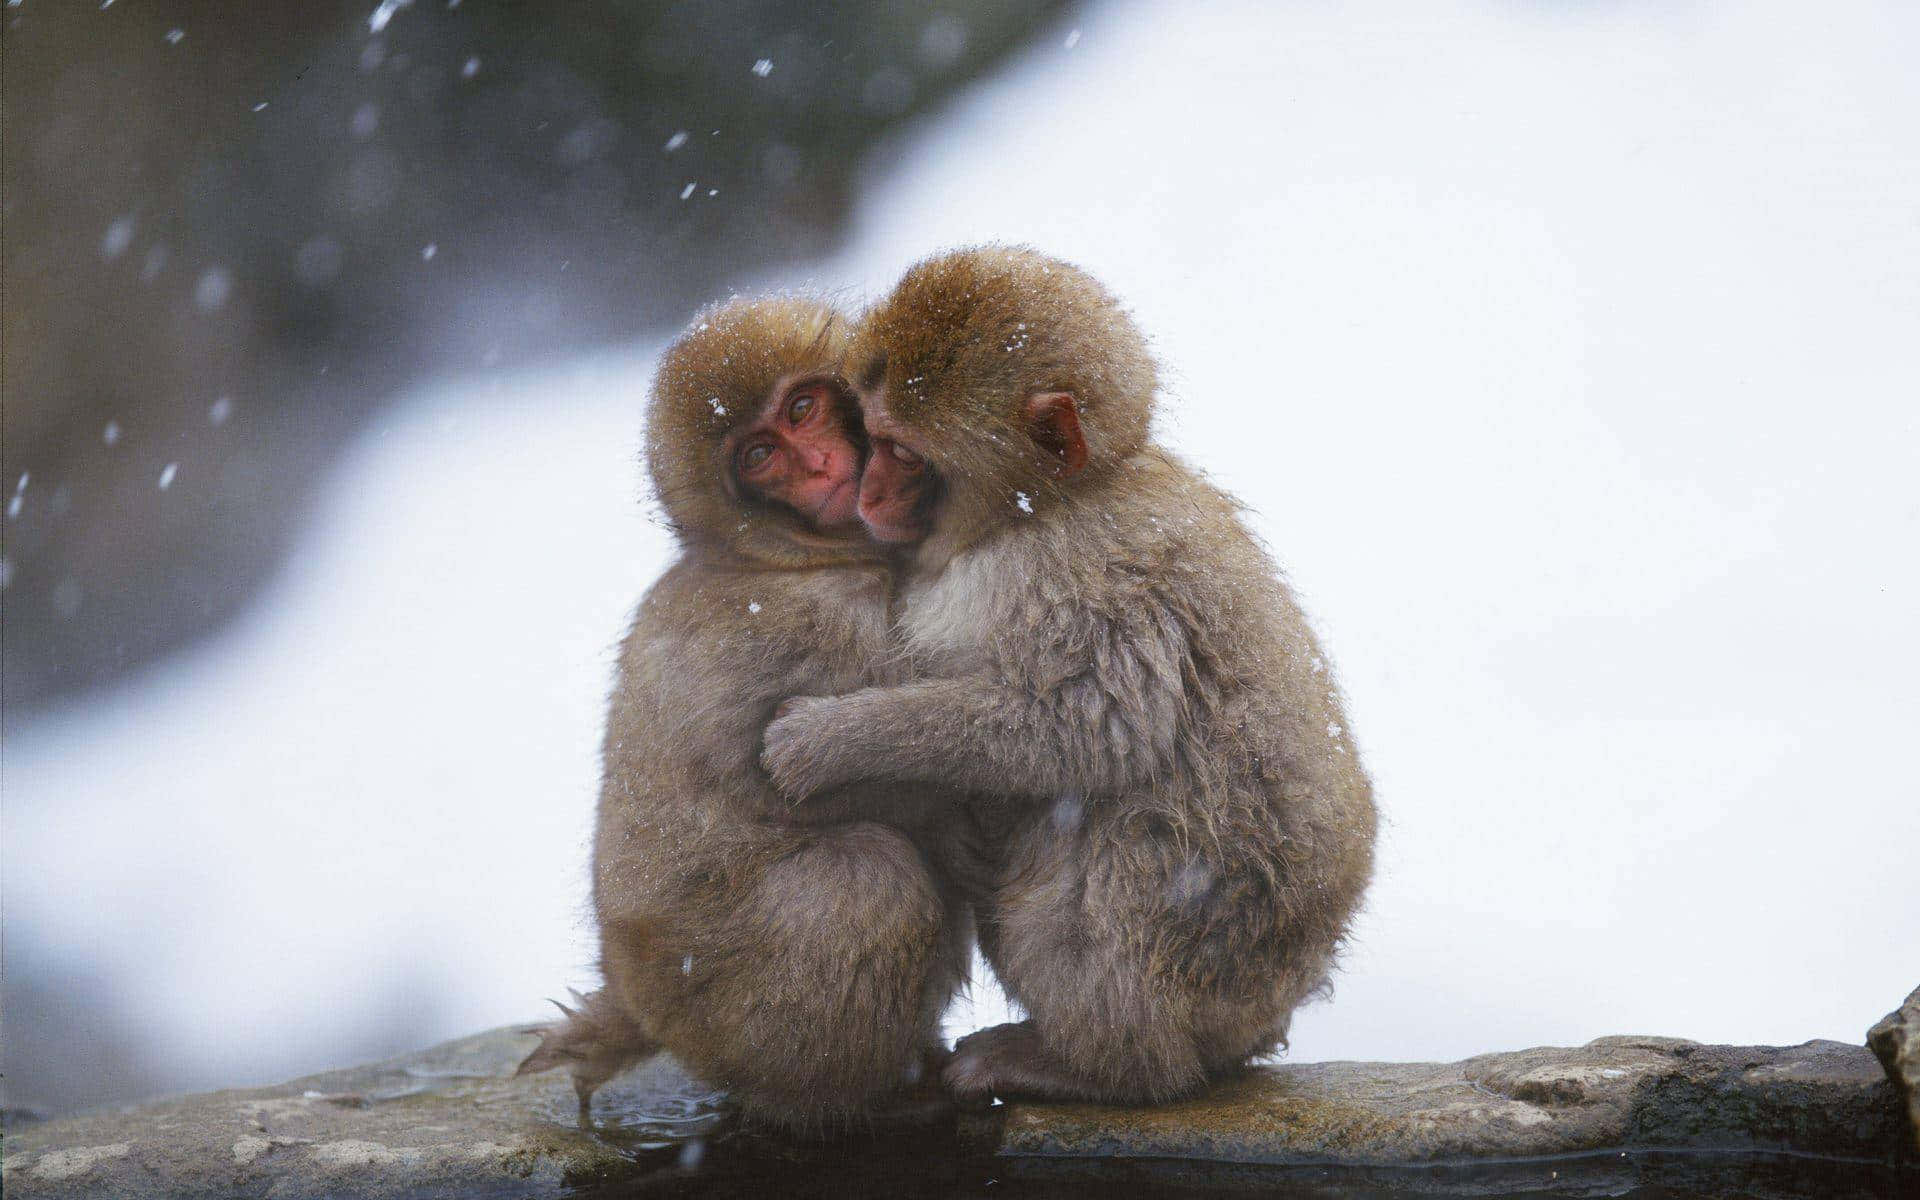 Hugging Cute Monkey Photo Wallpaper